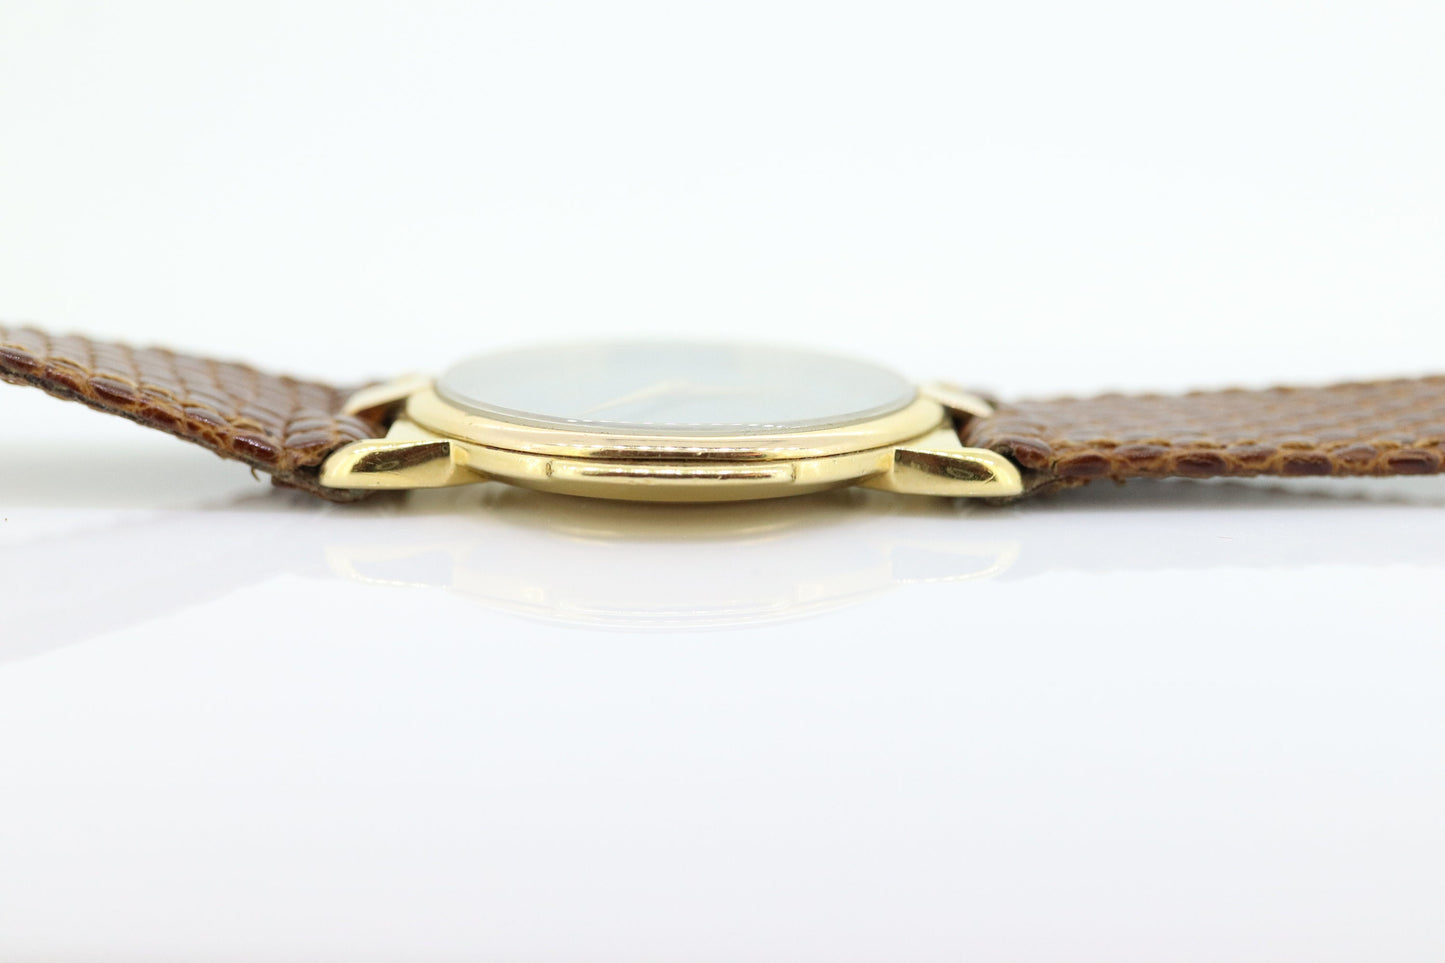 Vintage GUCCI 3400 FM Quartz Leather Watch Timepiece. Ladies Mens 18k Gold Plated Gucci watch st(130)